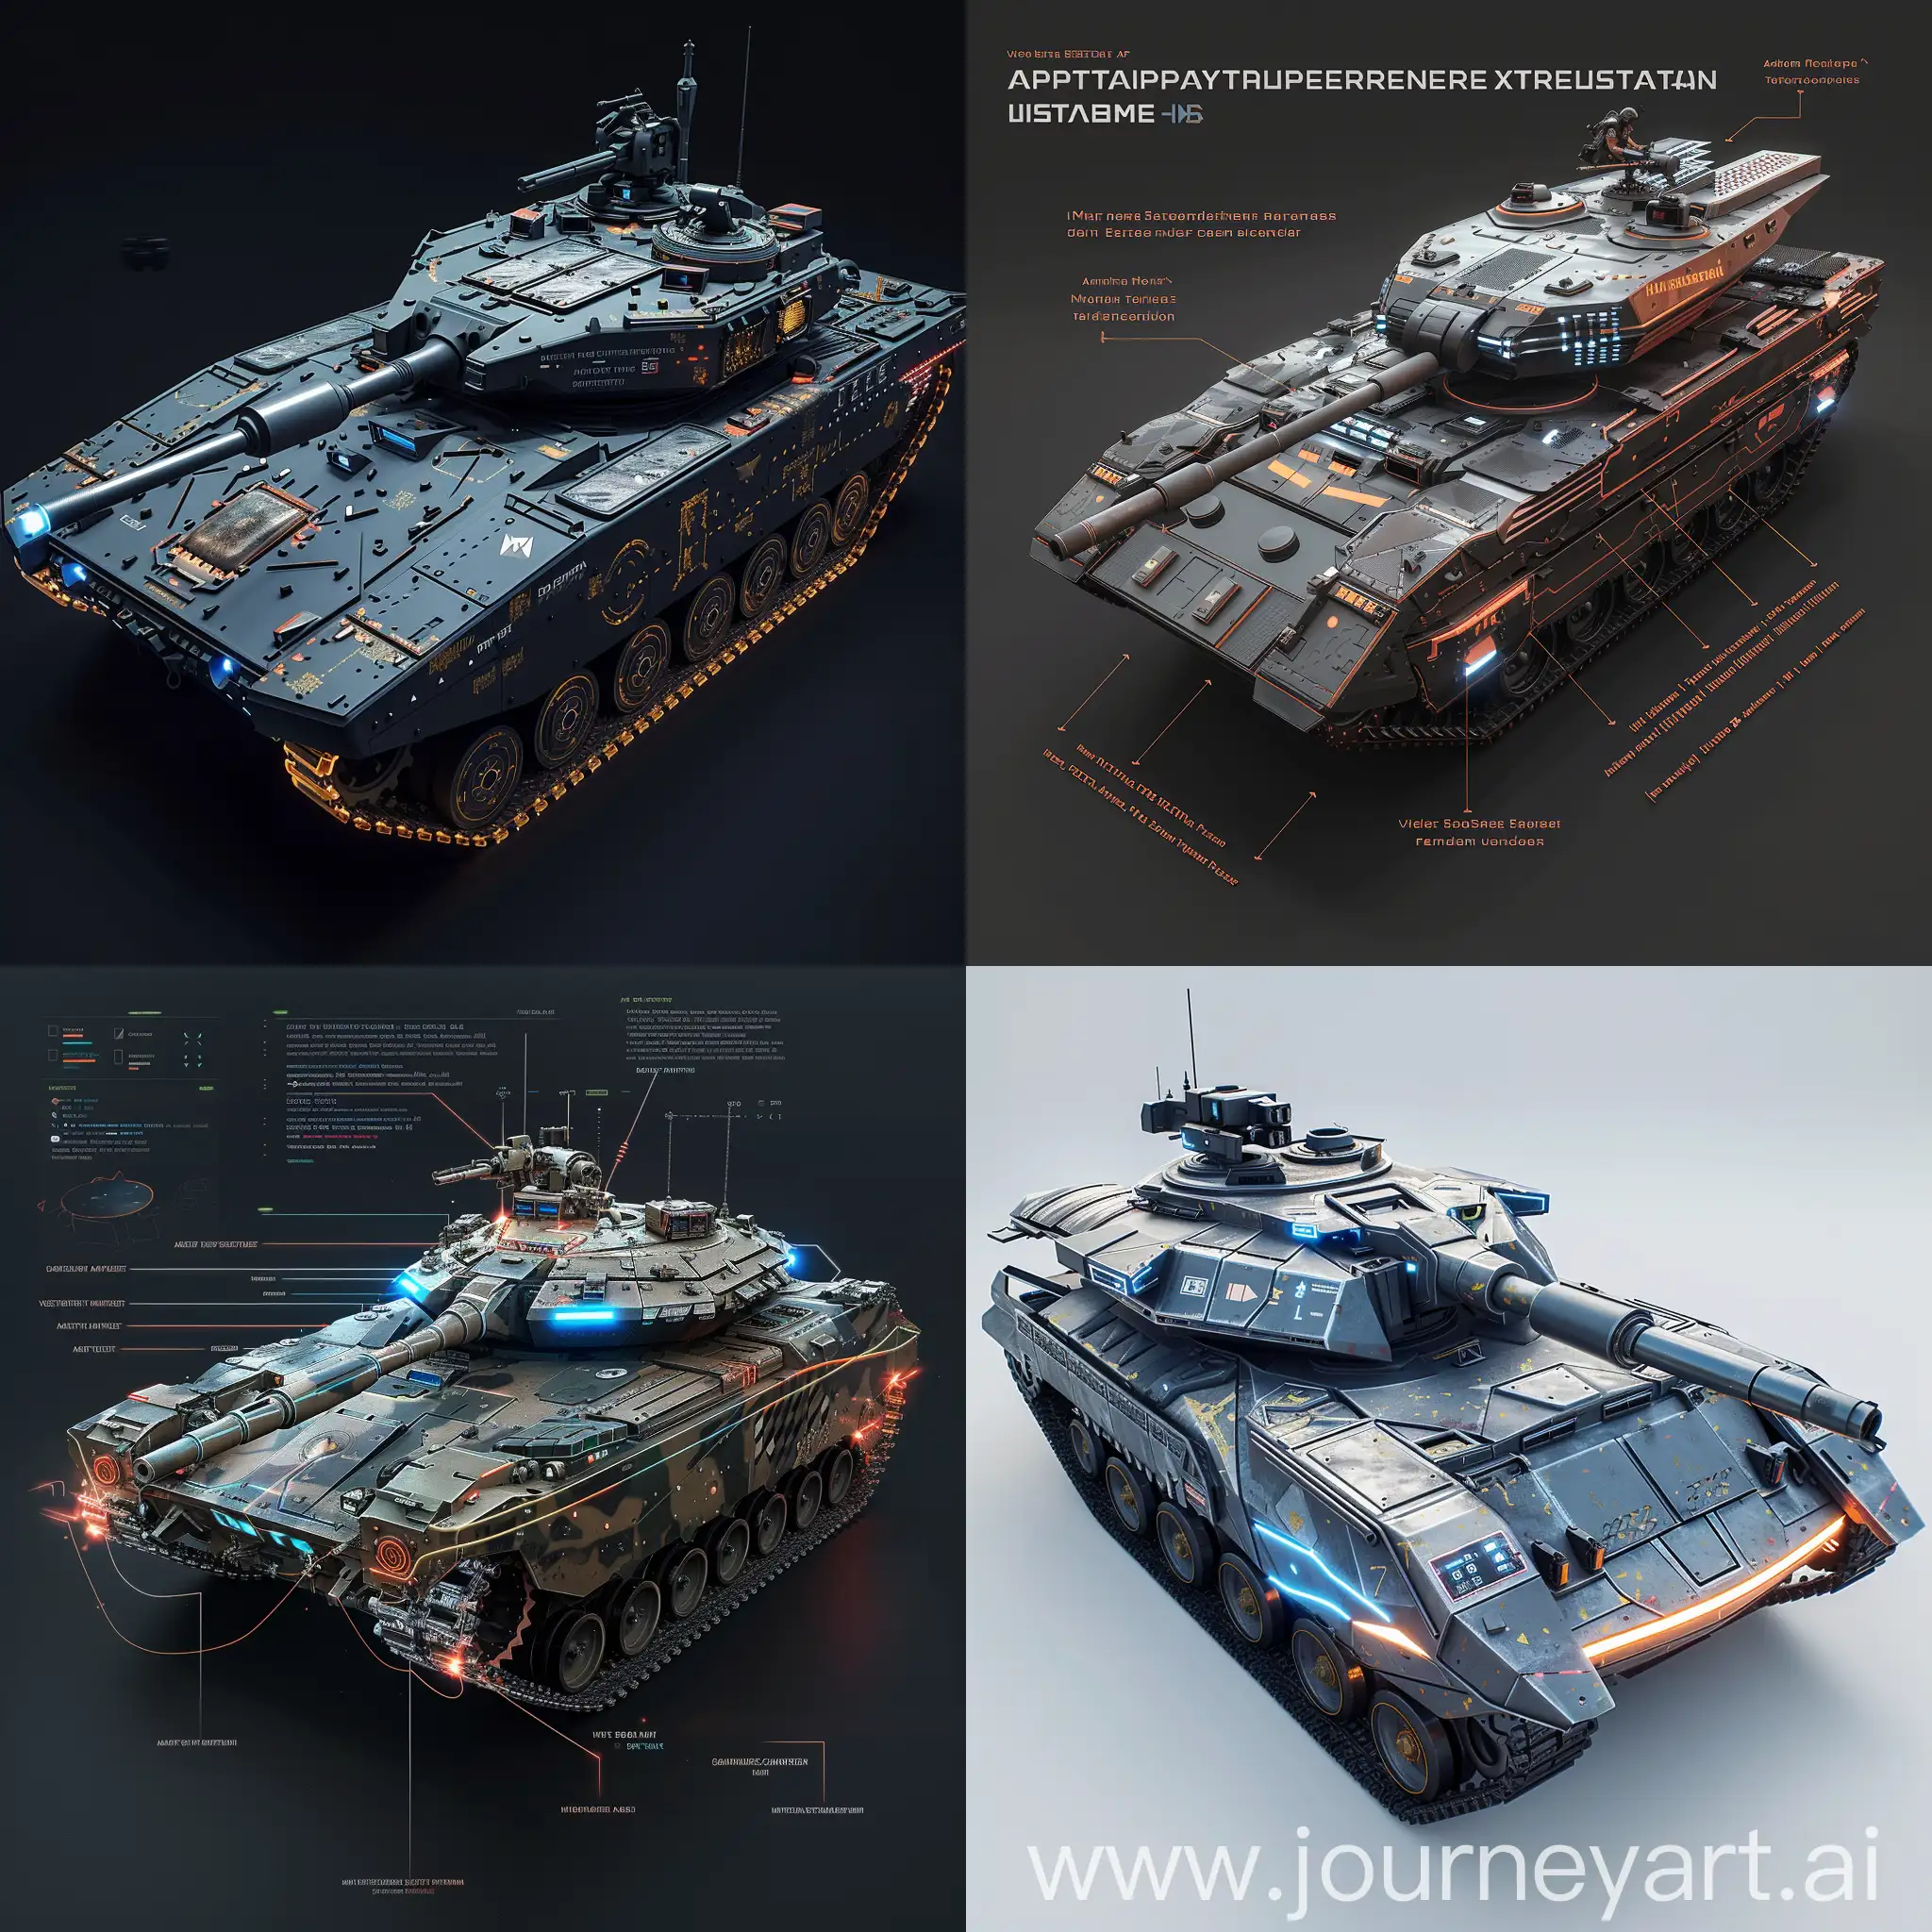 Futuristic-Tank-with-Advanced-Armor-and-Autonomous-Systems